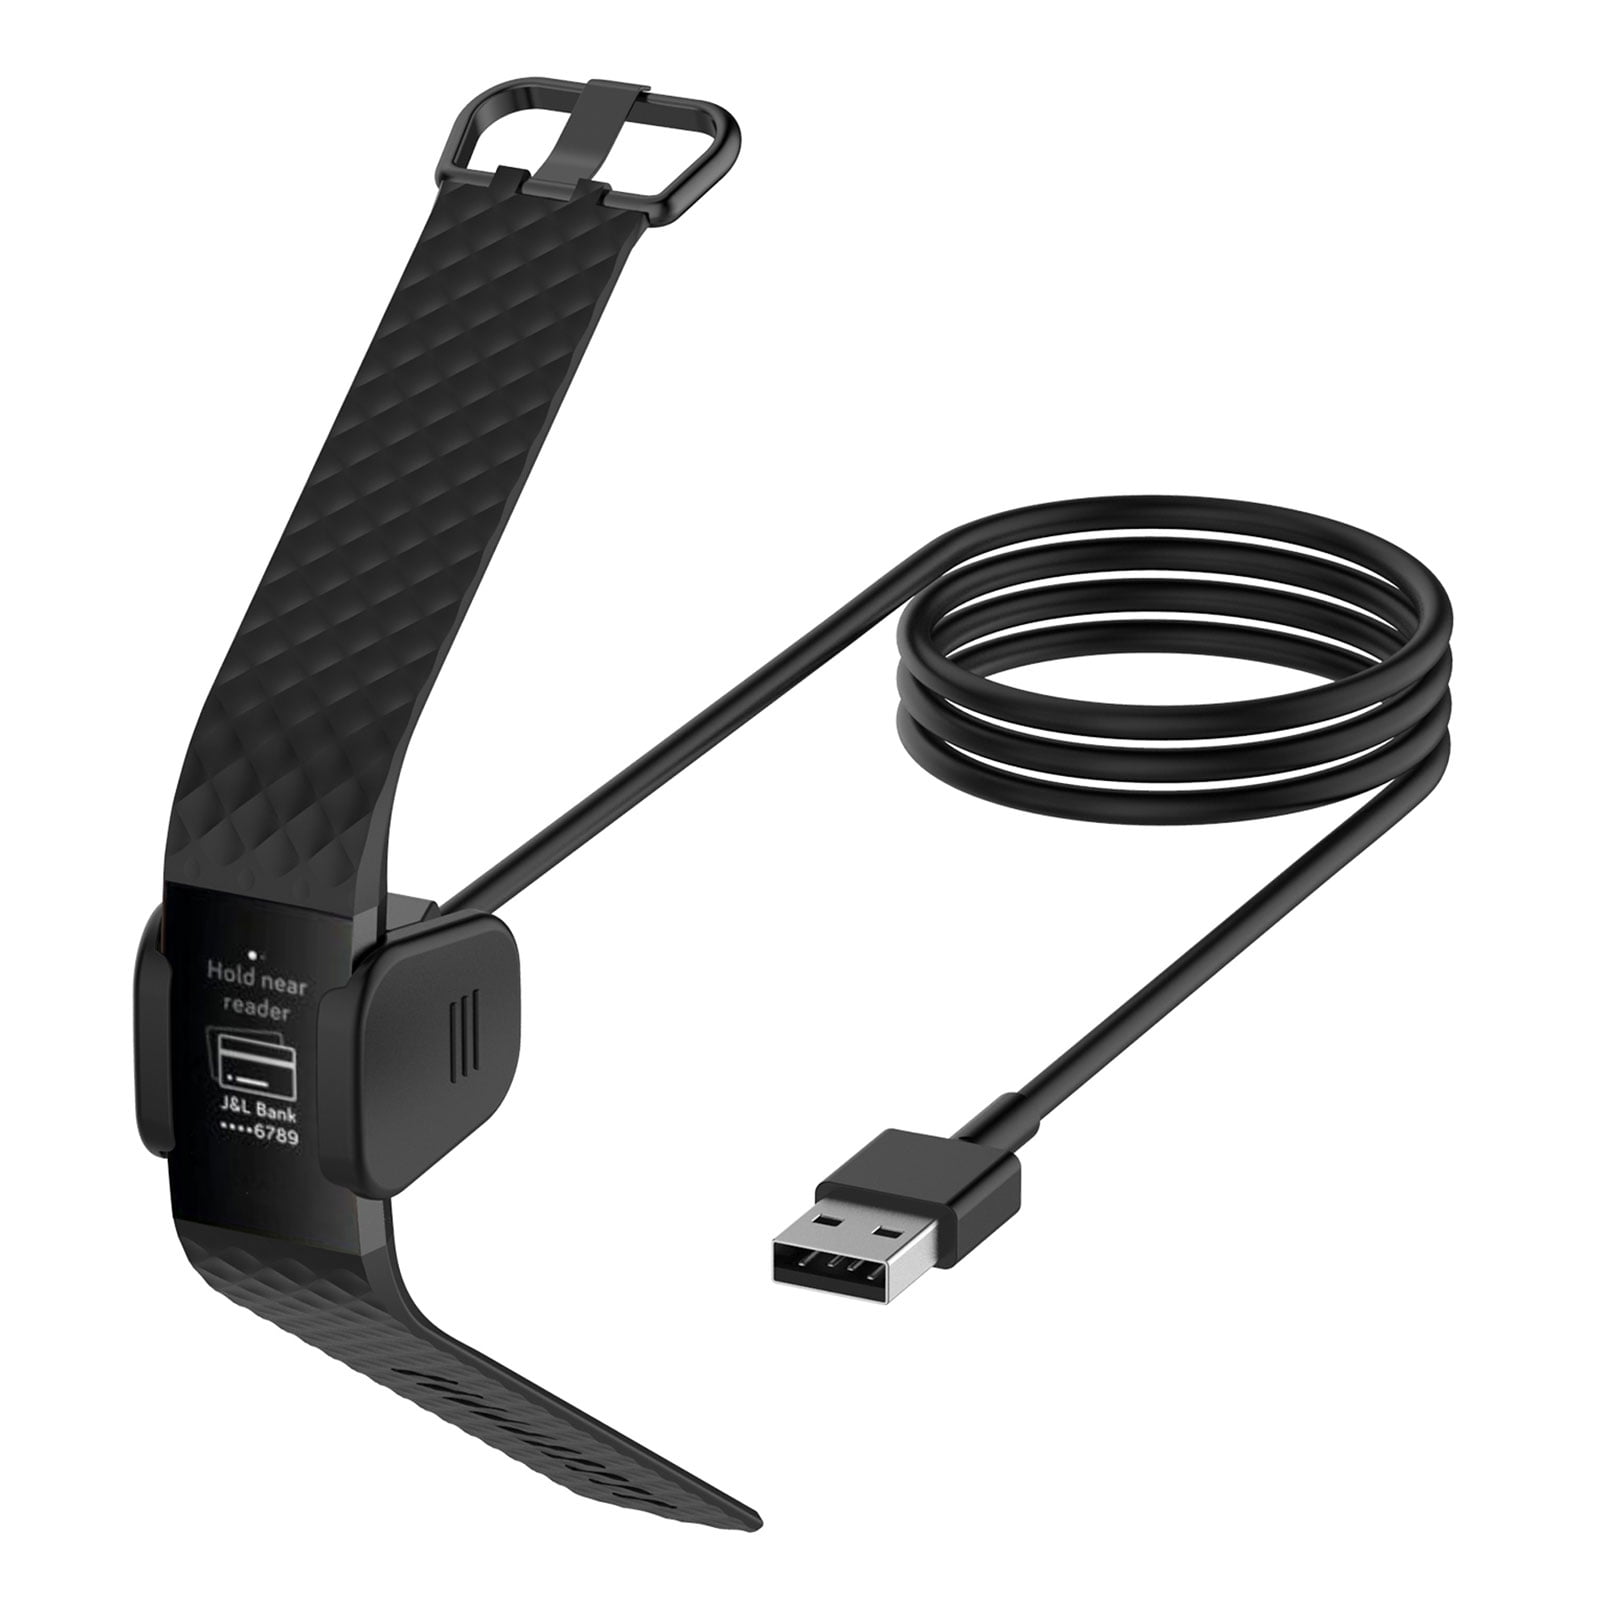 EEEkit USB Charger Dock Adapter 